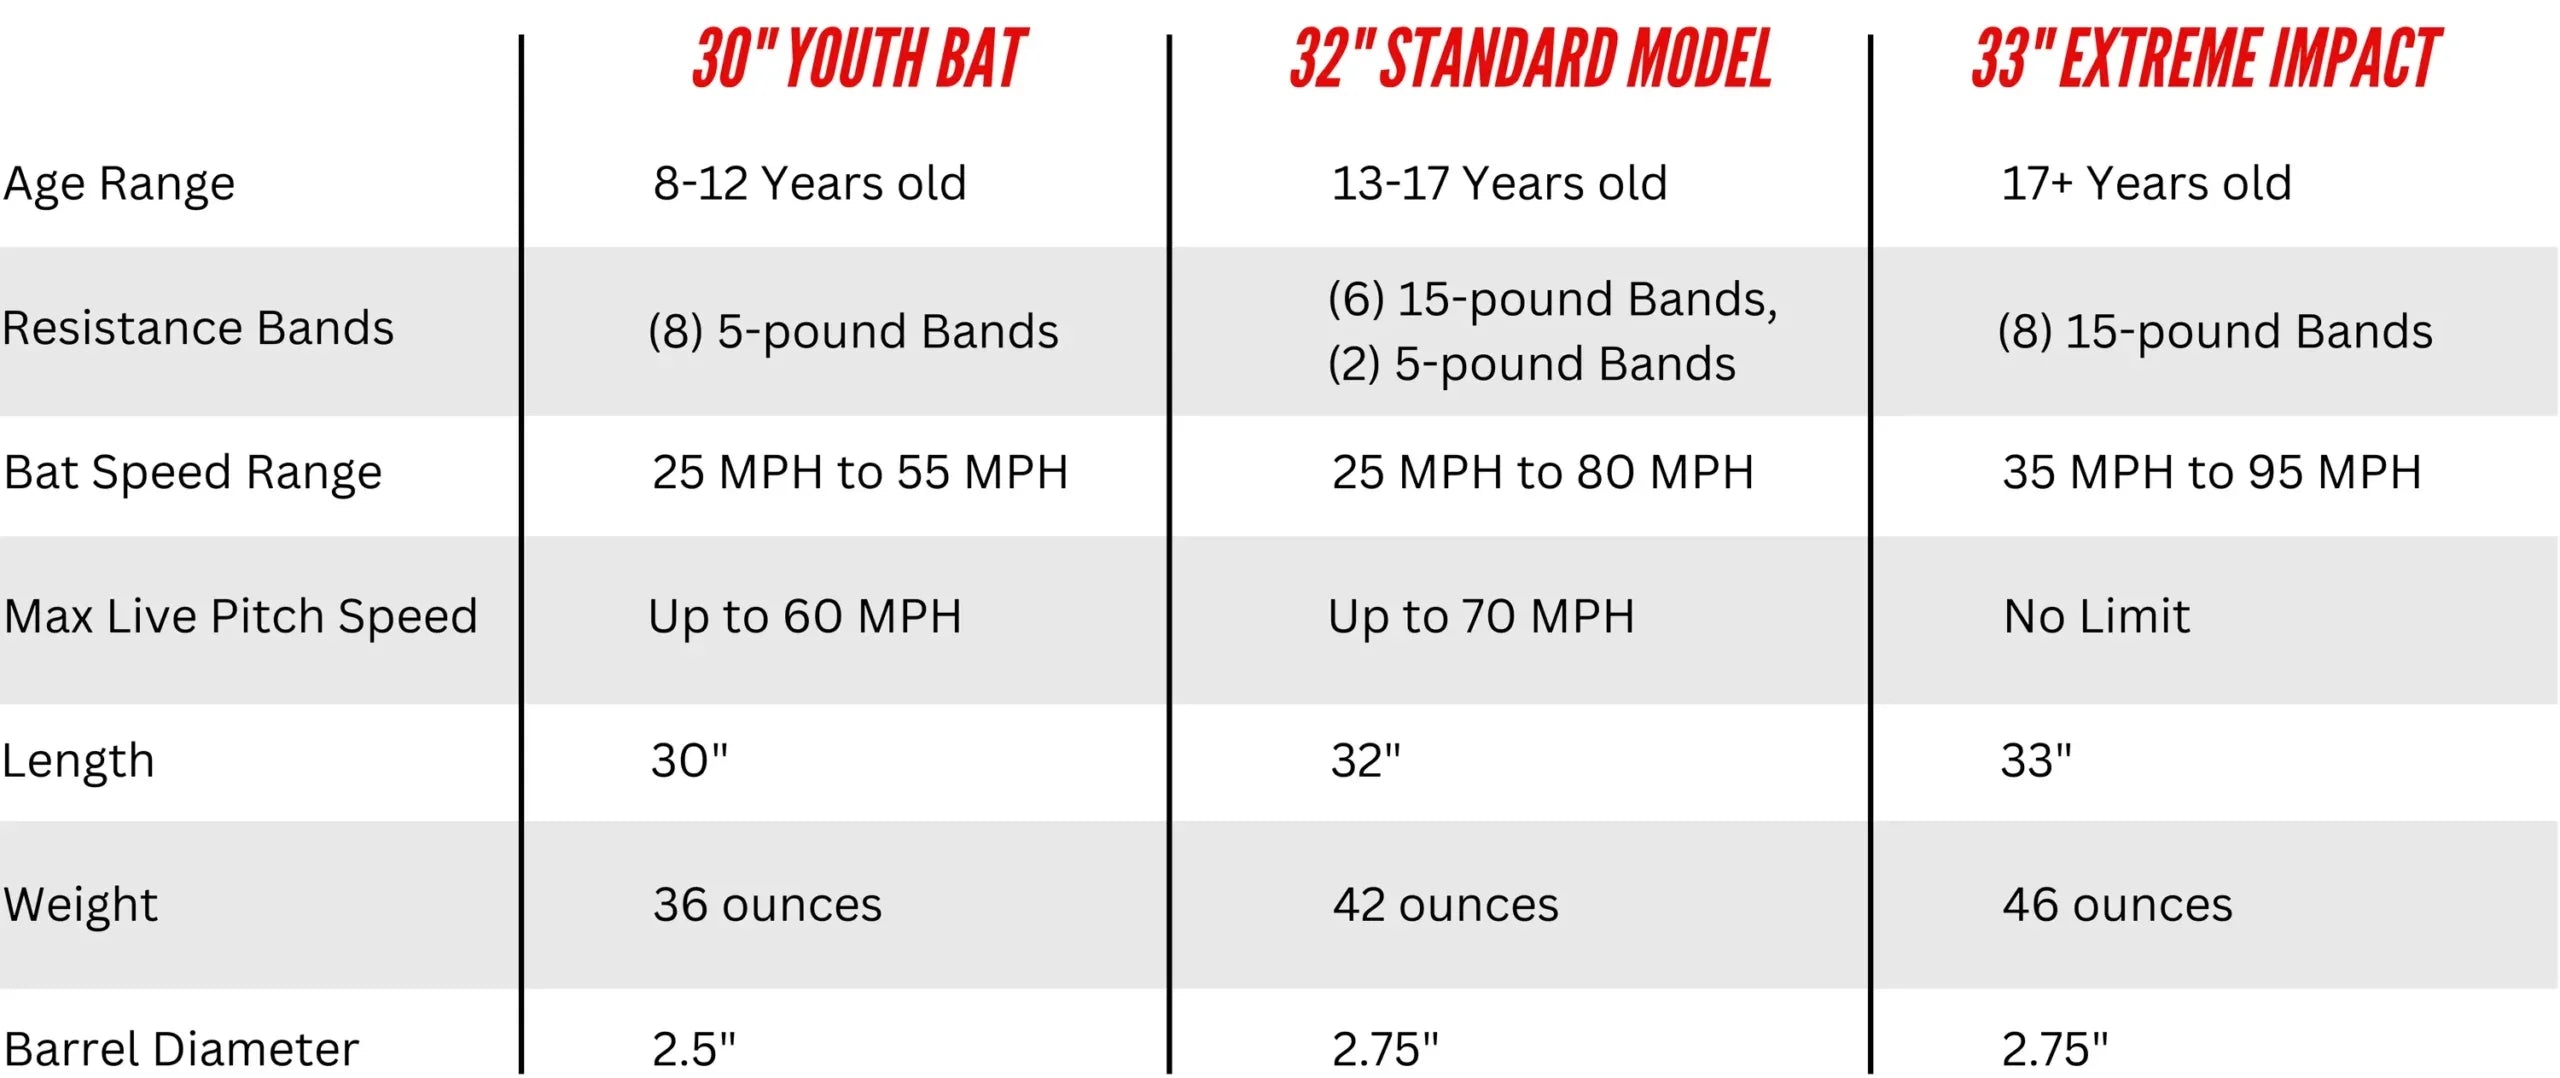 Pro Velocity Bat - Youth 30"